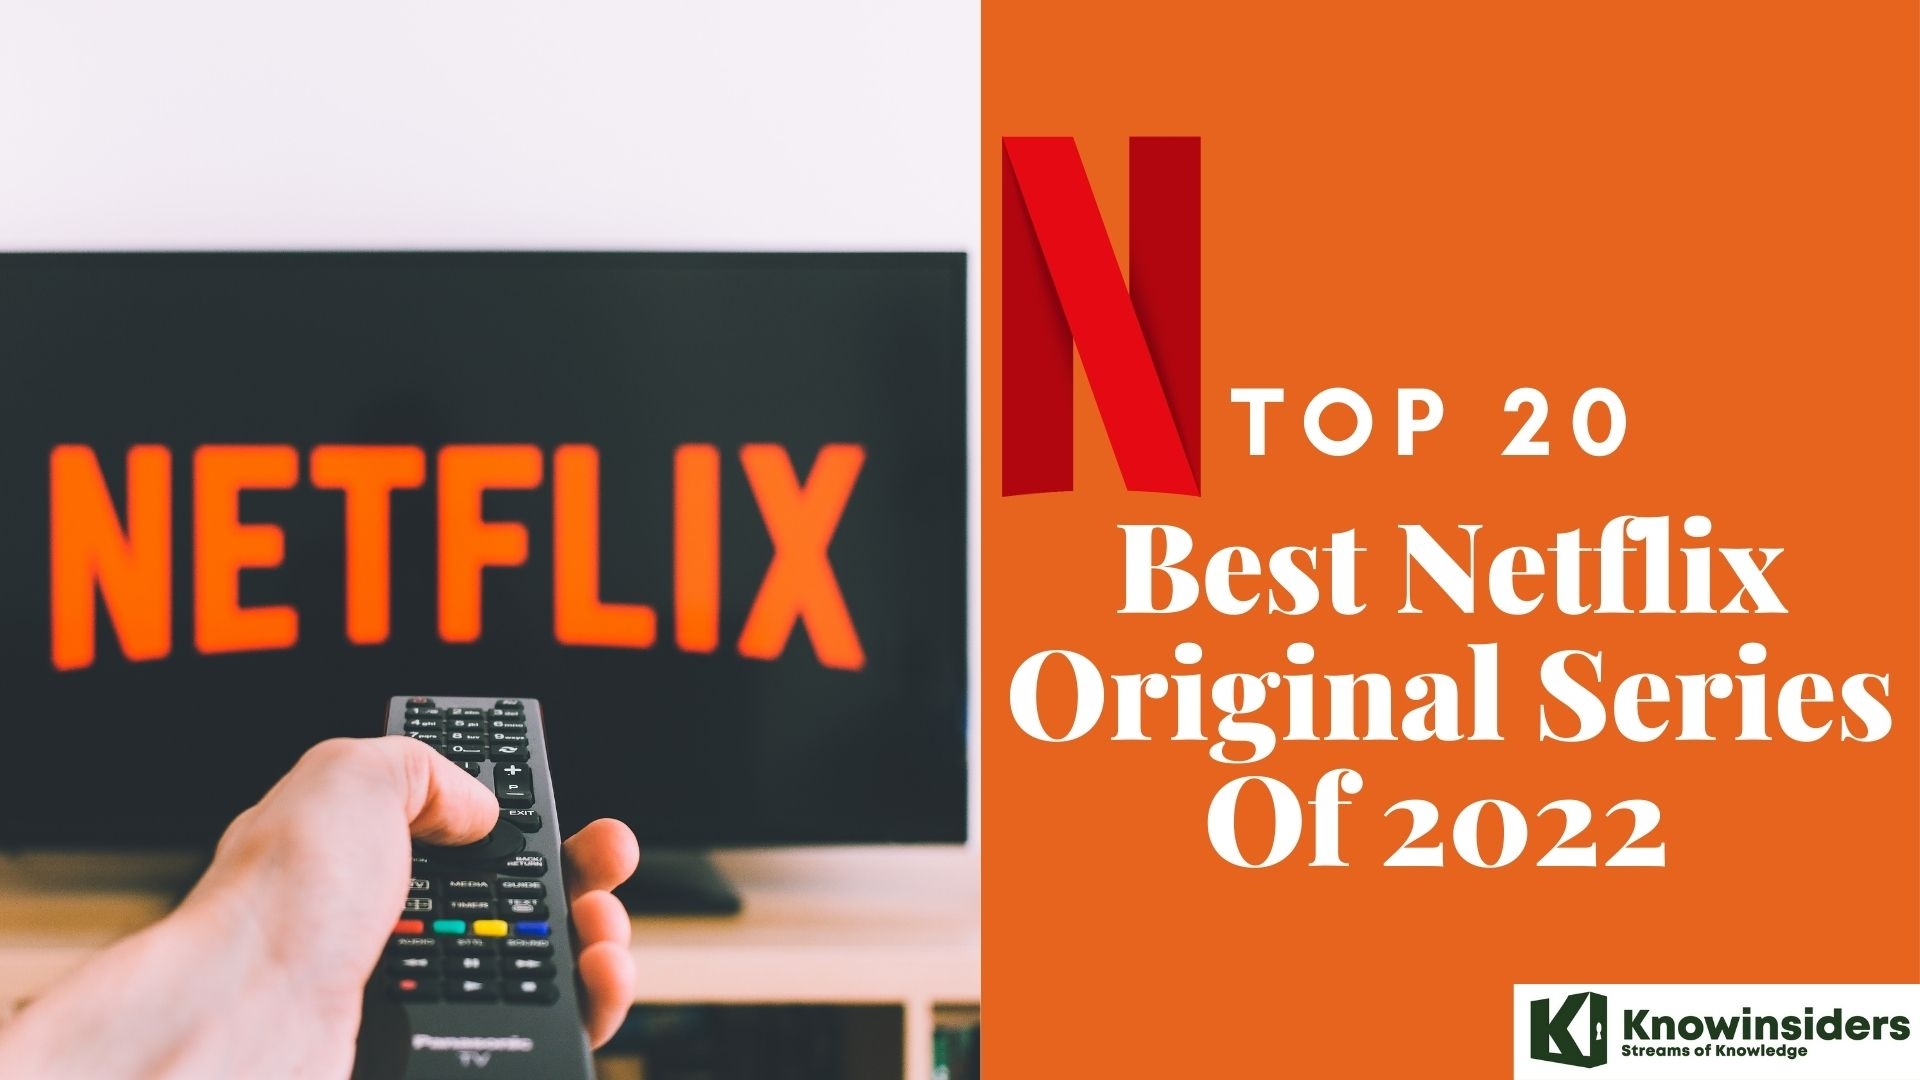 Top 20 Best Netflix Original Series of 2022